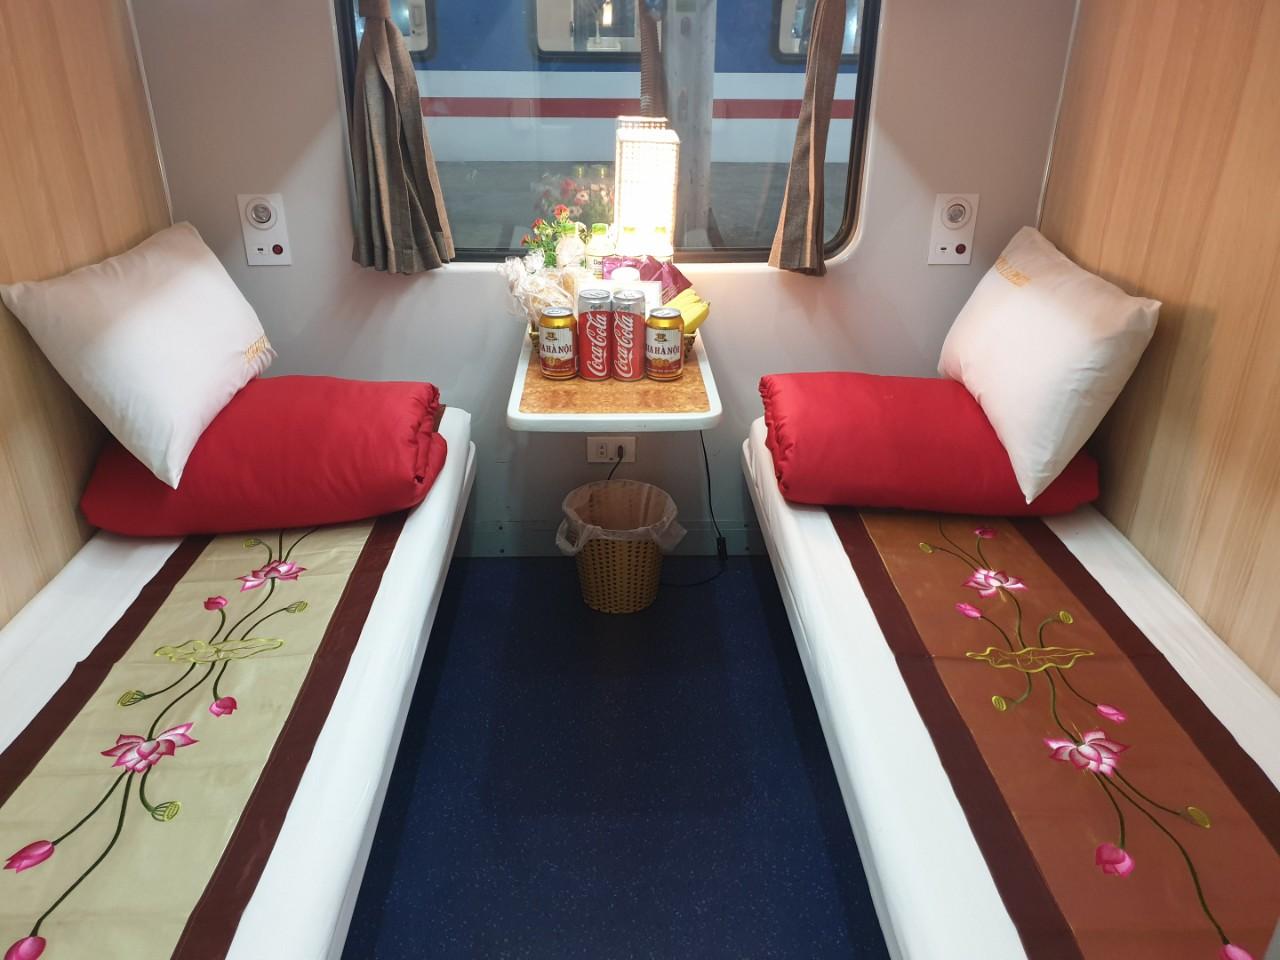 Ninh Binh – Hue on Lotus Train SE19 (22h00 – 09h10)